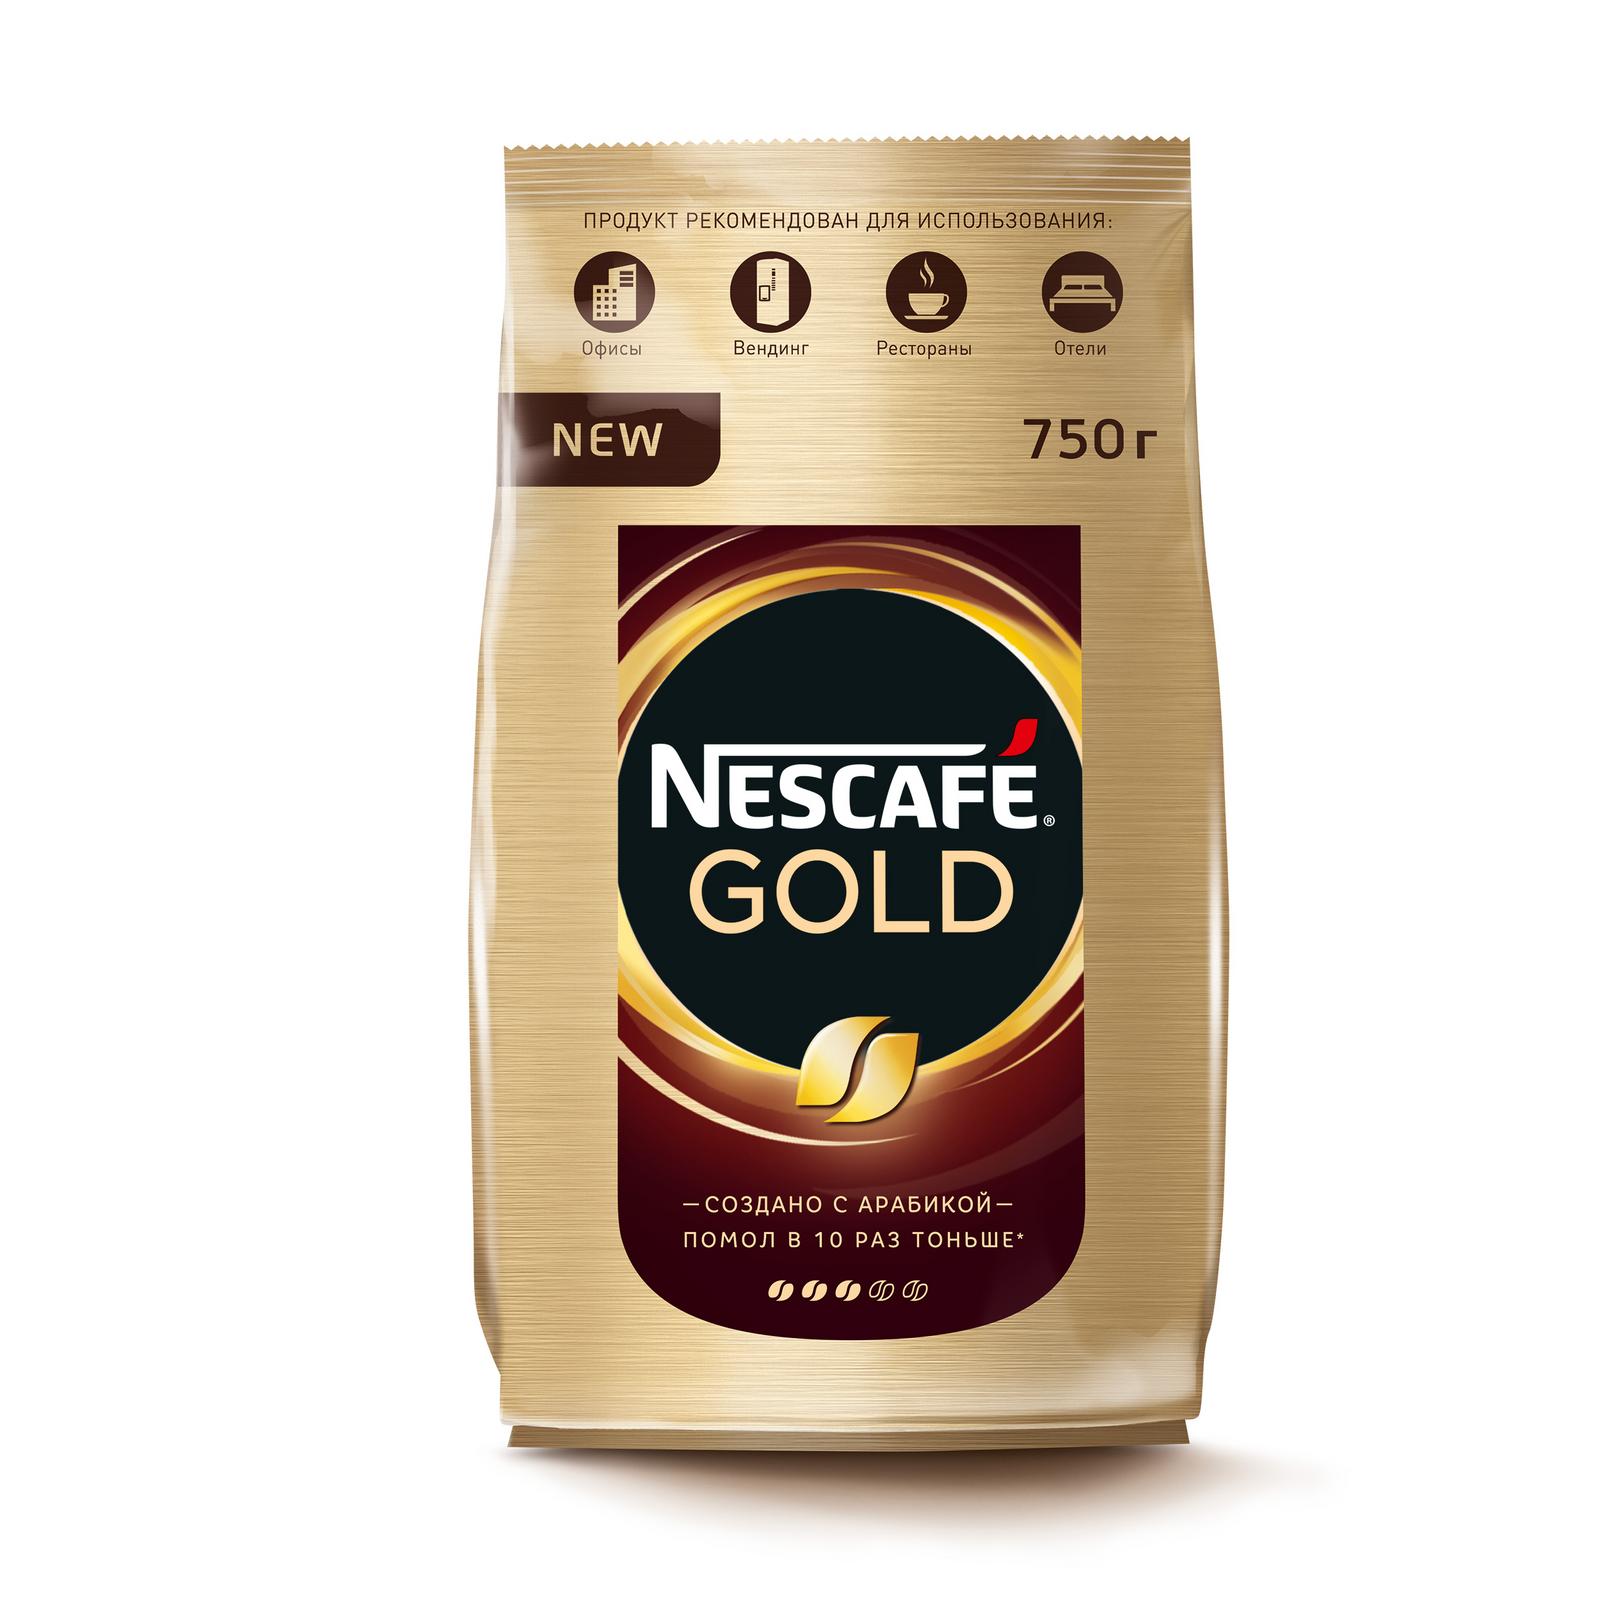 Nescafe gold молотый. Nescafe кофе Gold 900г.. Кофе Нескафе Голд 750г. Кофе растворимый Nescafe Gold 900 гр. Кофе Нескафе Голд 750 гр.